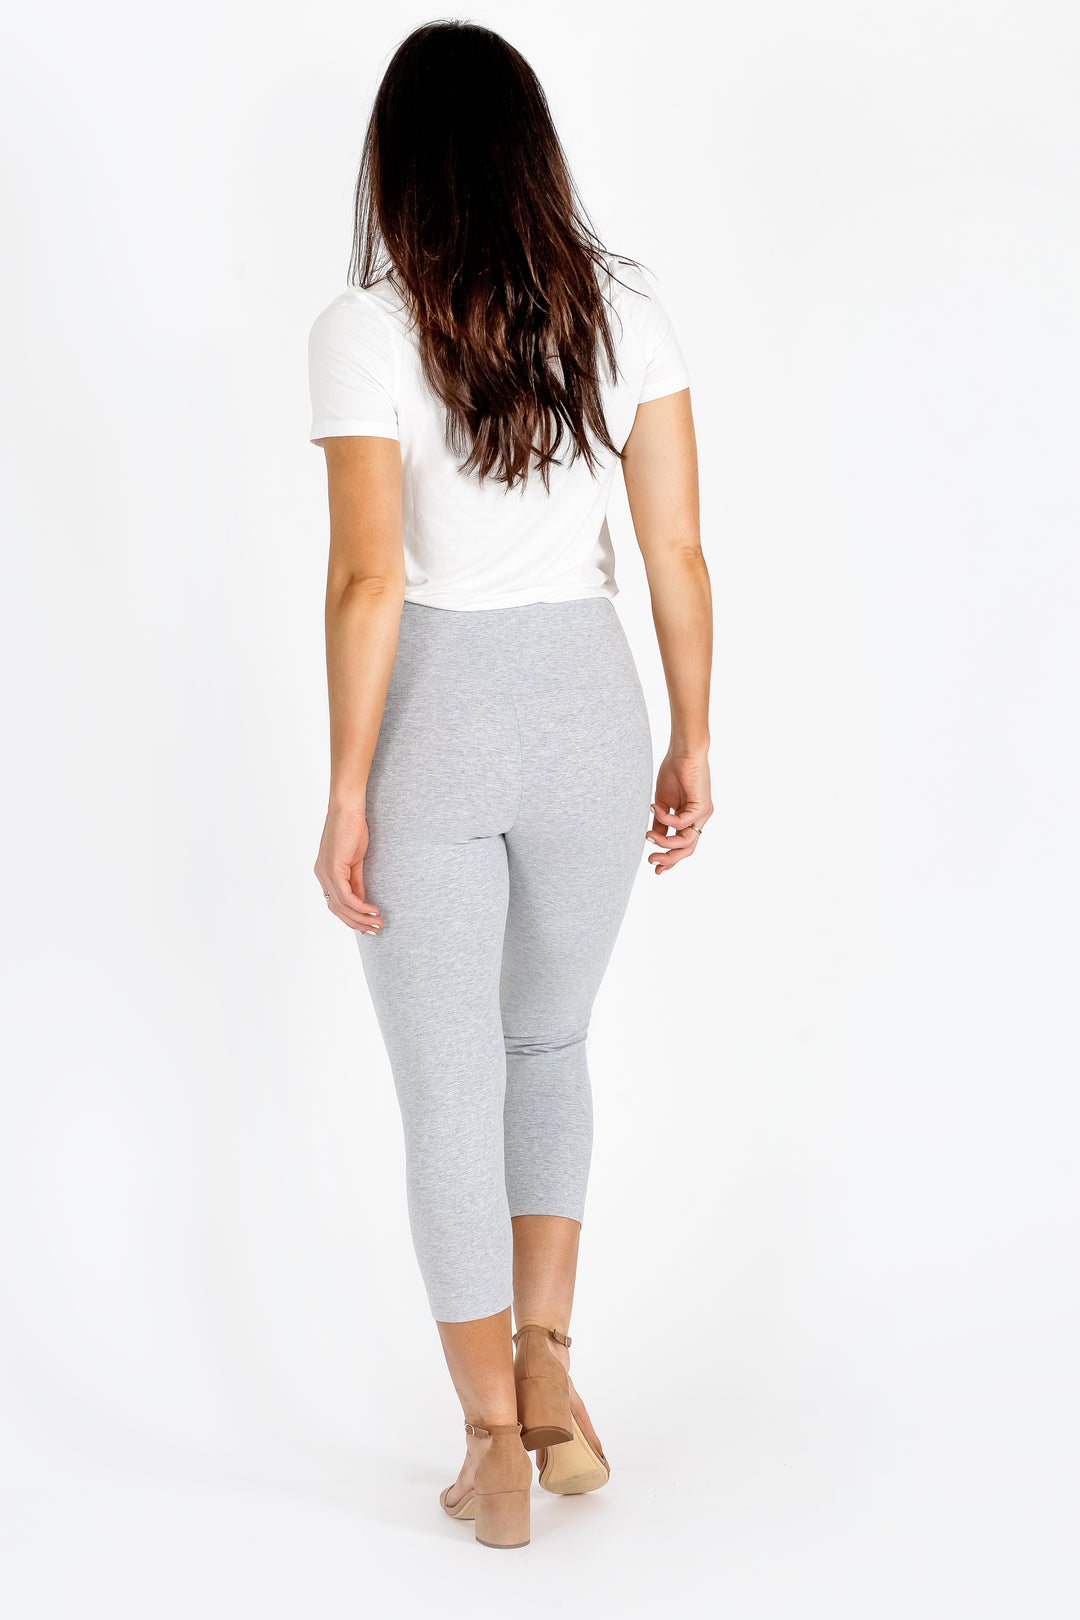 Intro Love the Fit Capri Leggings Women's Plus Size 3X White NWT